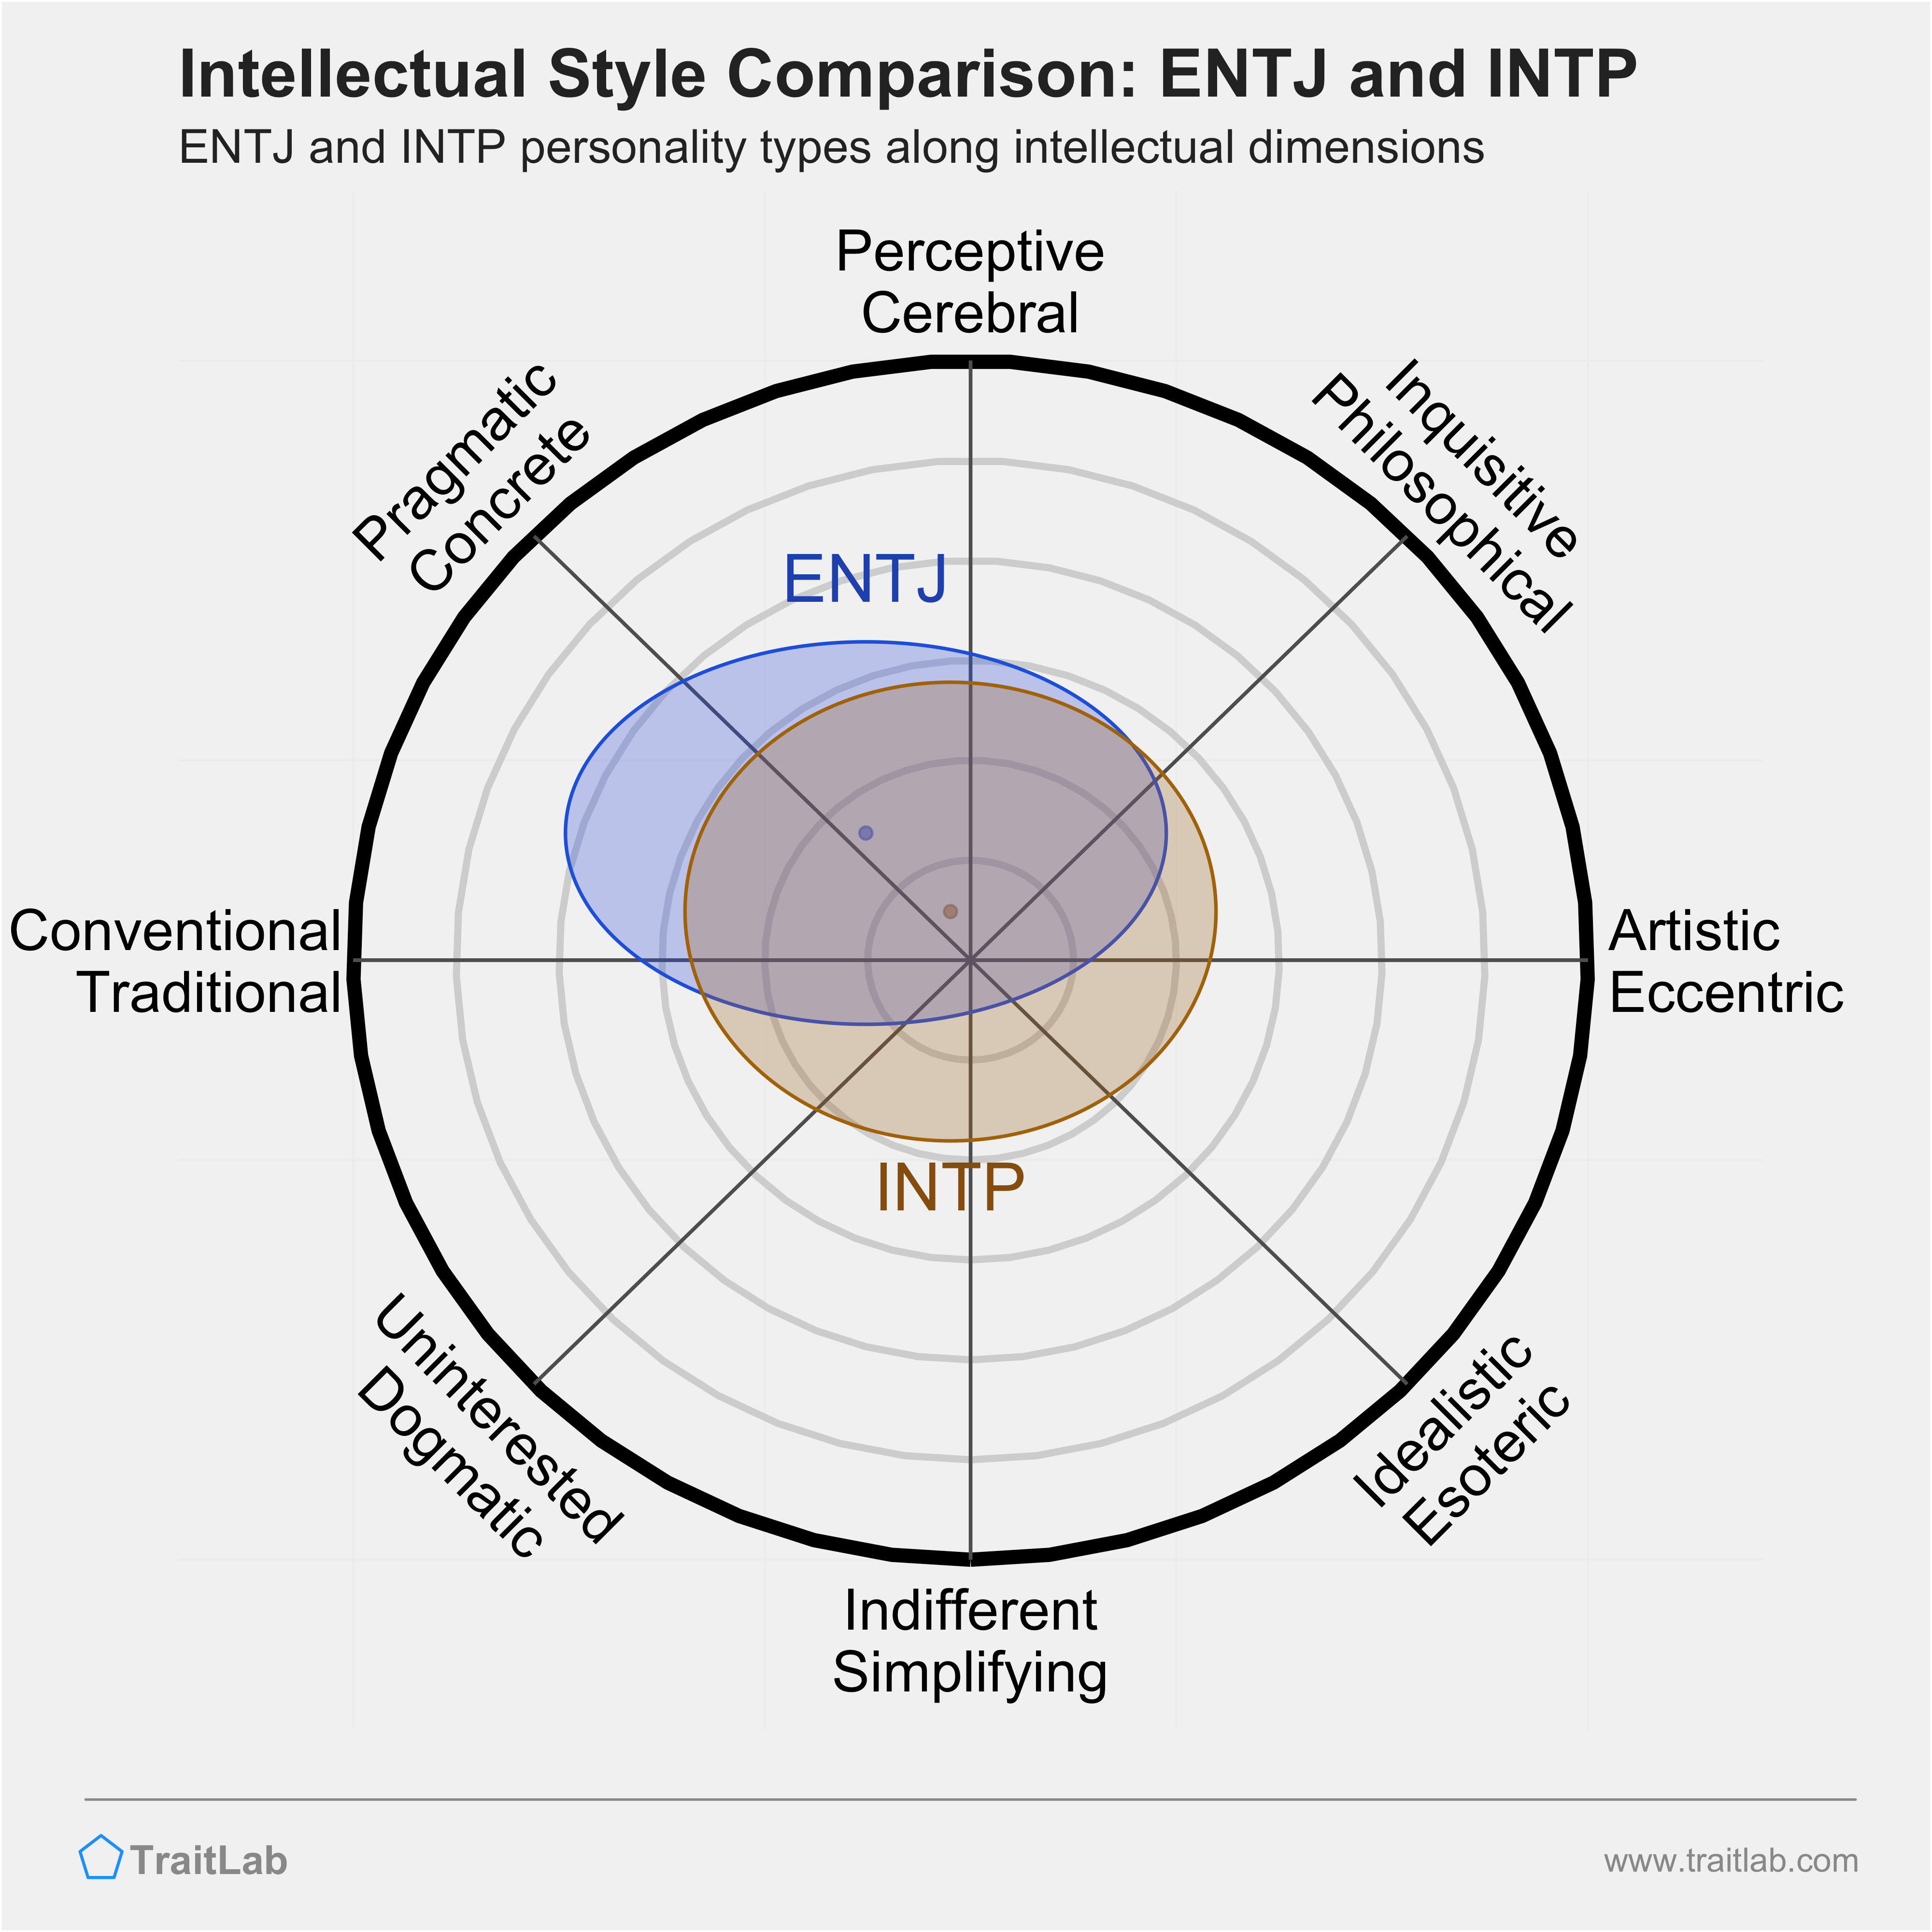 ENTJ and INTP comparison across intellectual dimensions